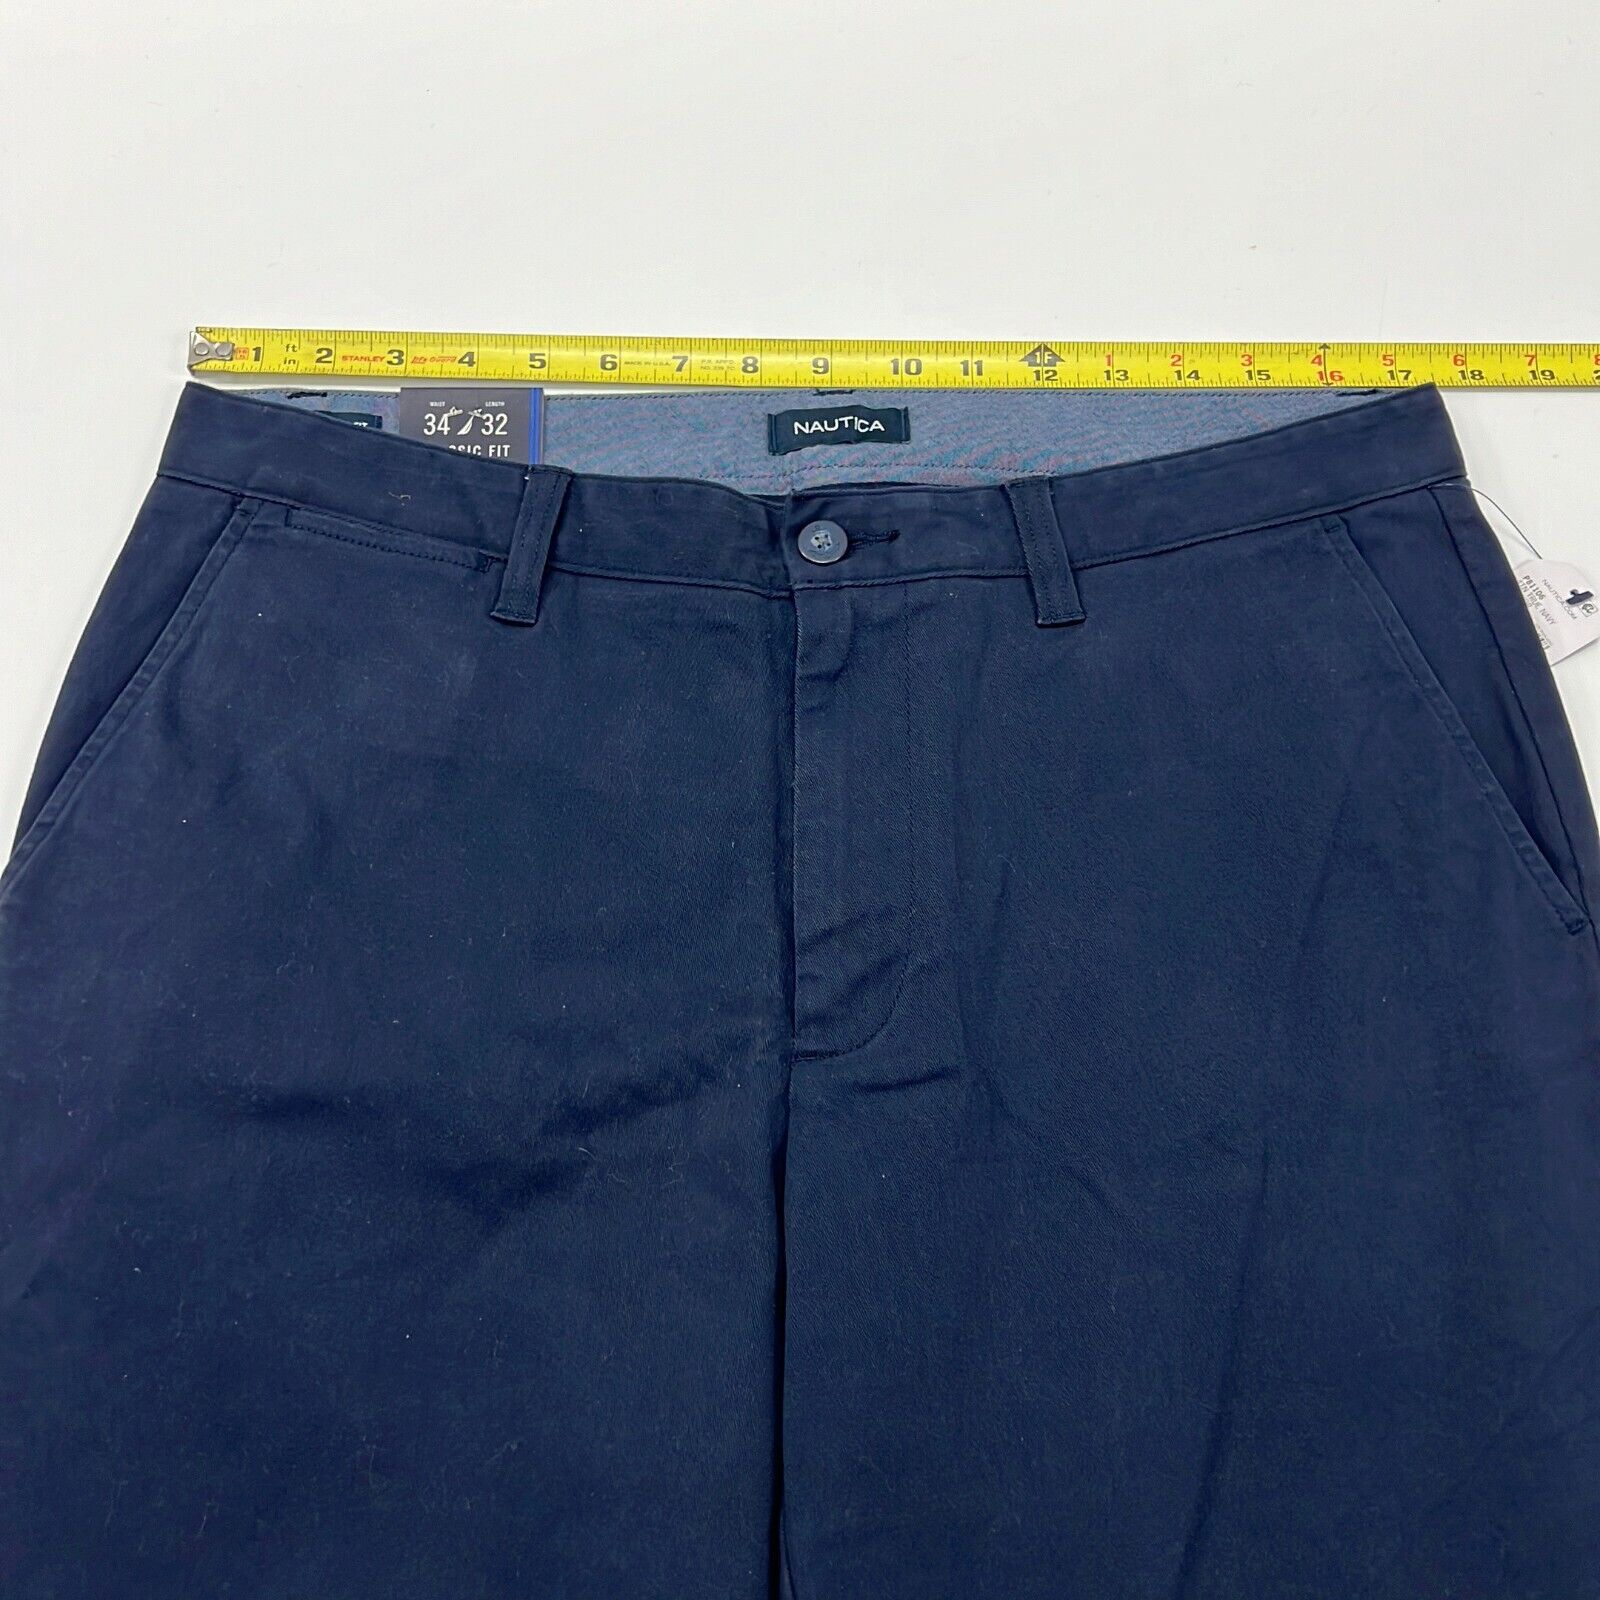 NWT Nautica Men's Blue Flat Front Classic Fit Slash Pockets Dress Pants Sz 34x32